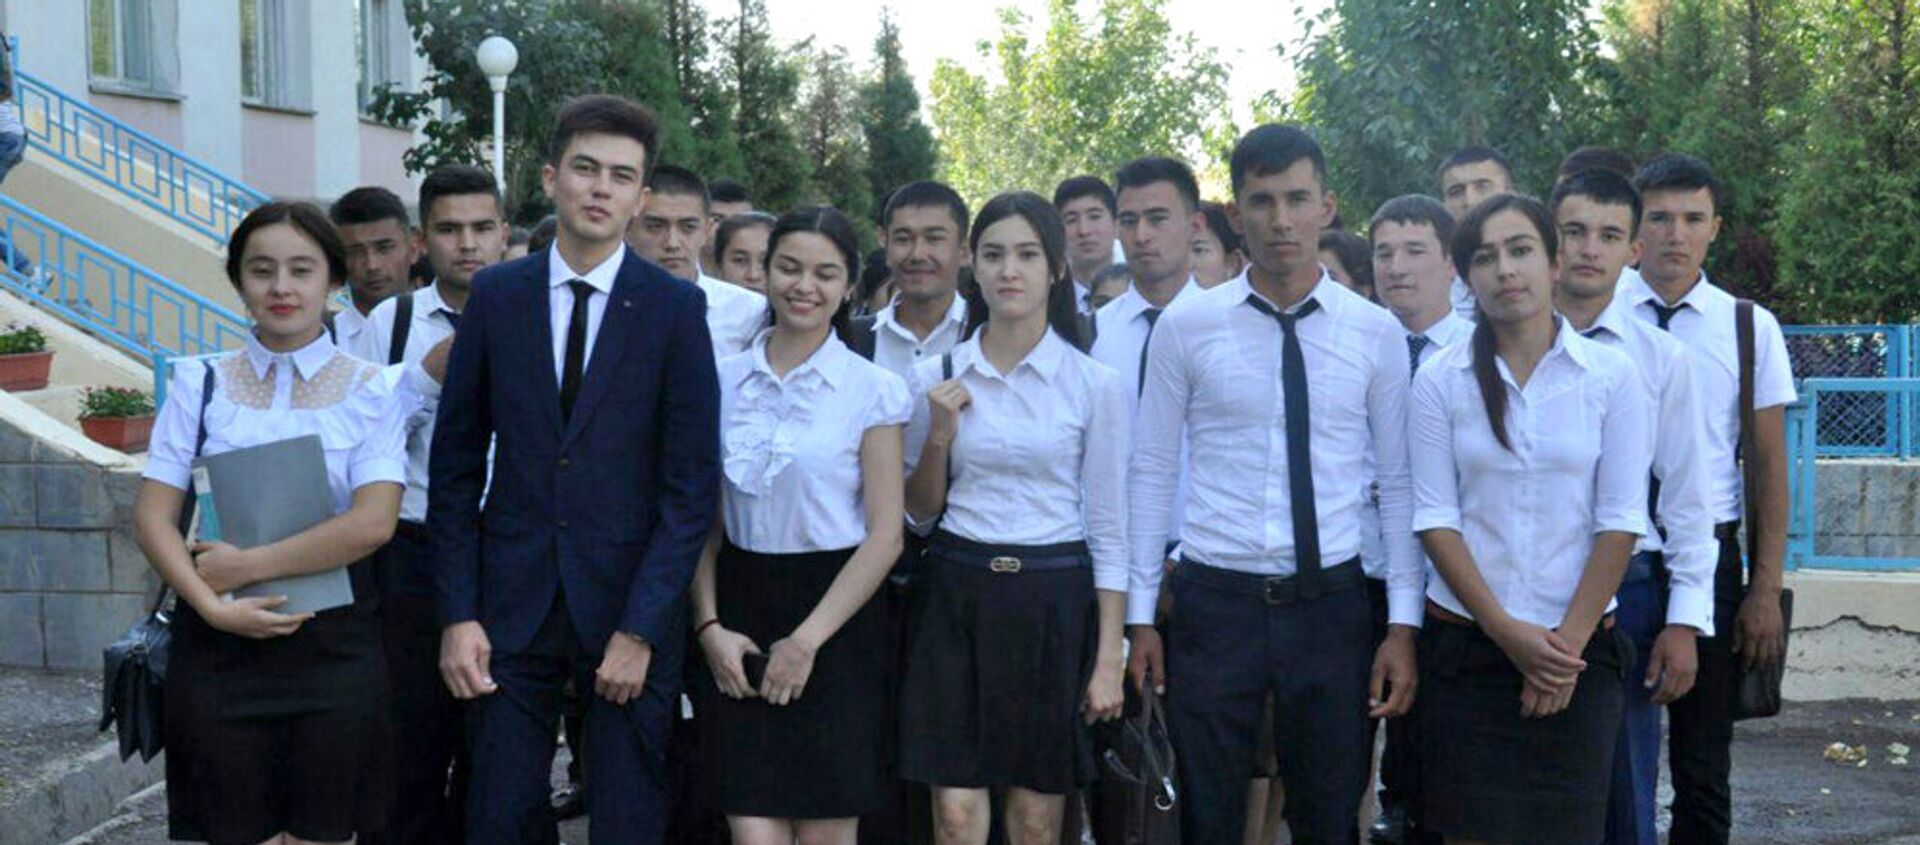 Студенты - Sputnik Узбекистан, 1920, 27.05.2018